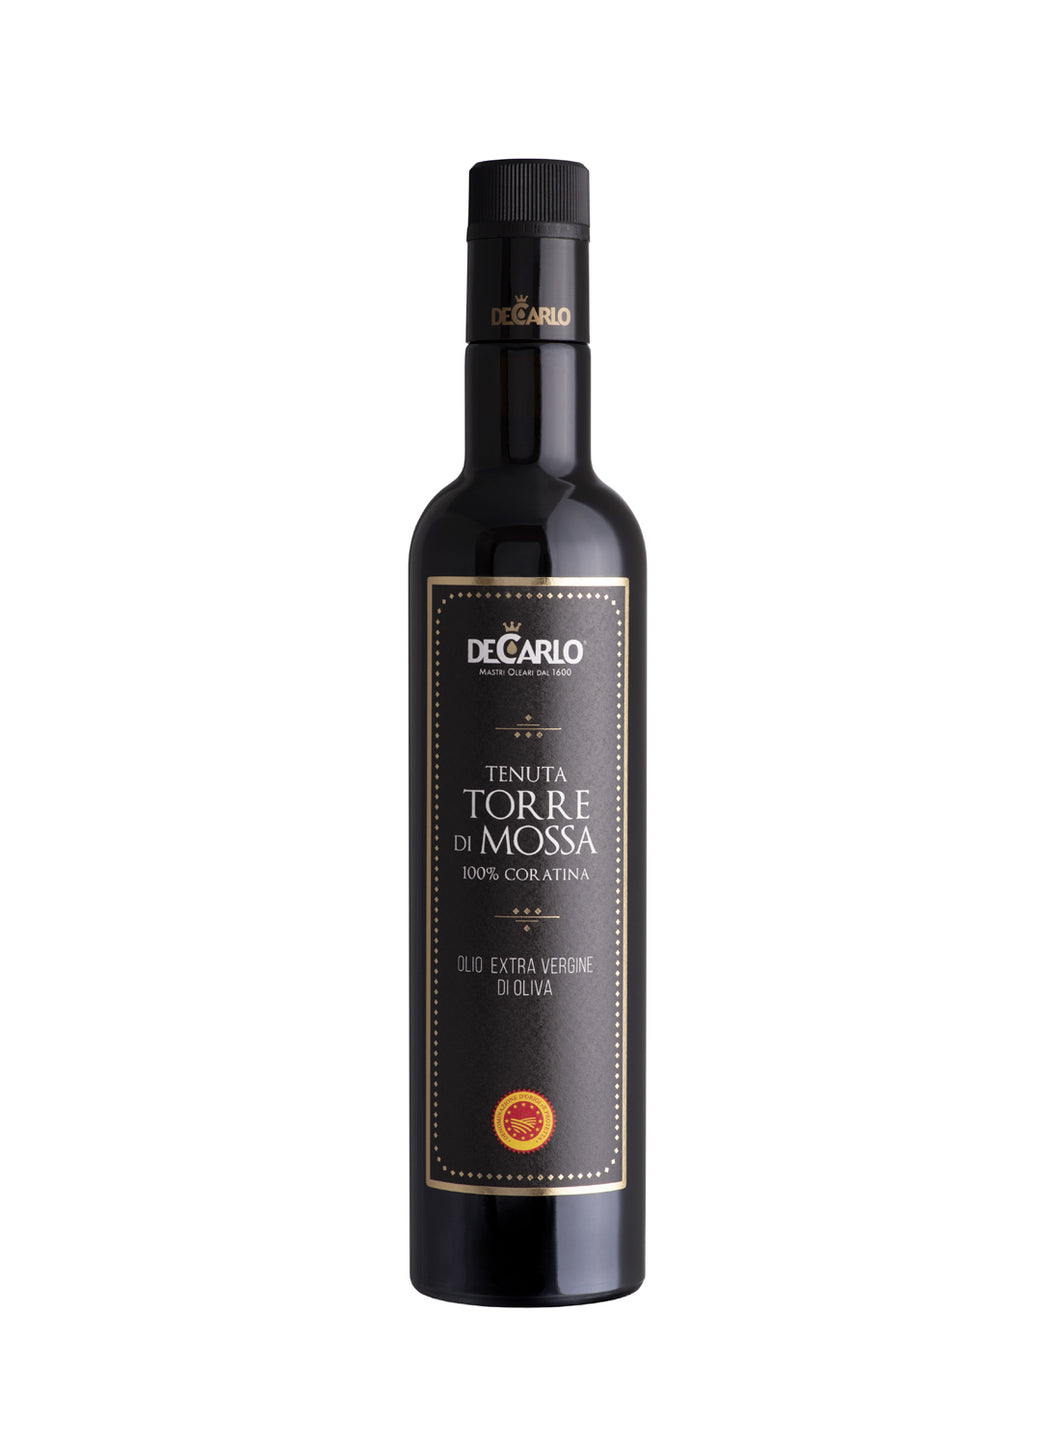 Black Glass Bottle of De Carlo Torre di Mossa Extra Virgin Olive Oil from Puglia, Italy